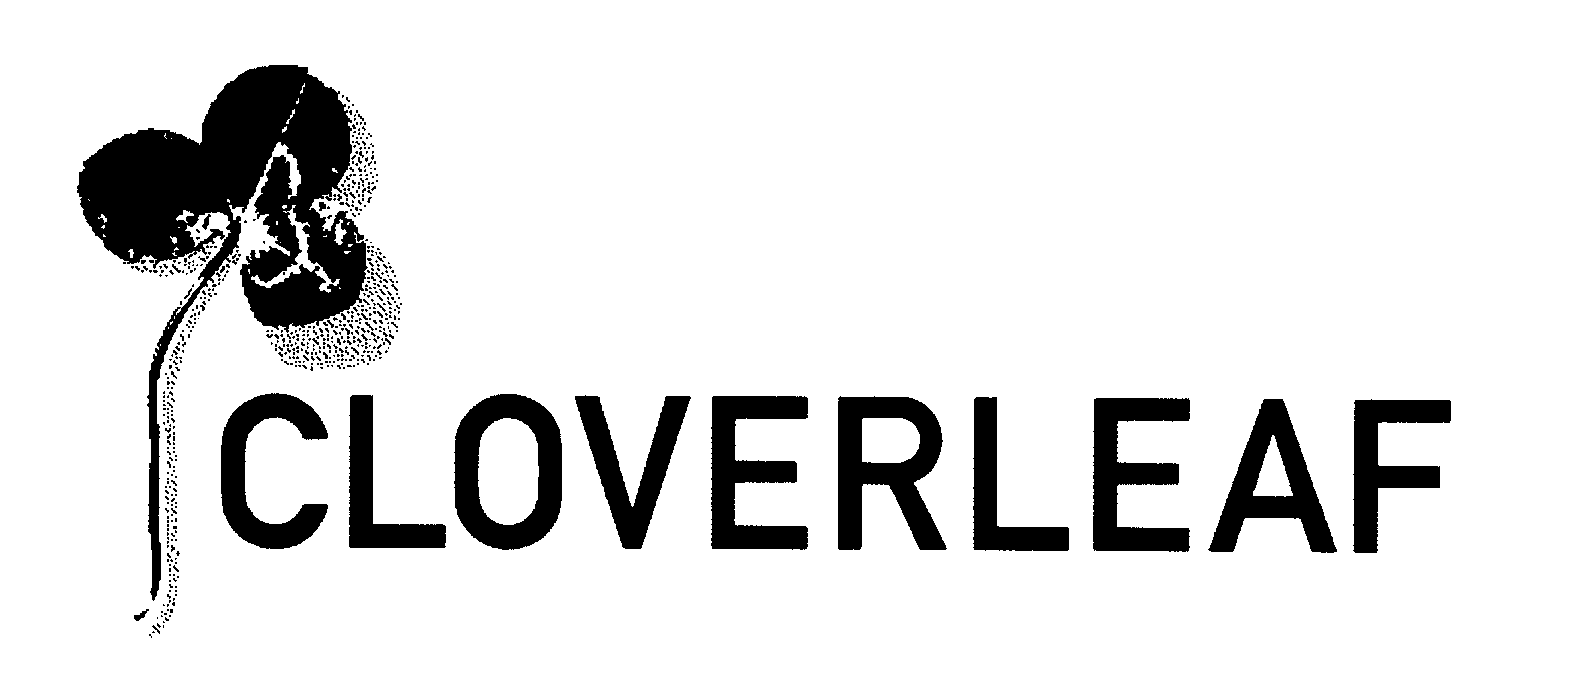 Trademark Logo CLOVERLEAF